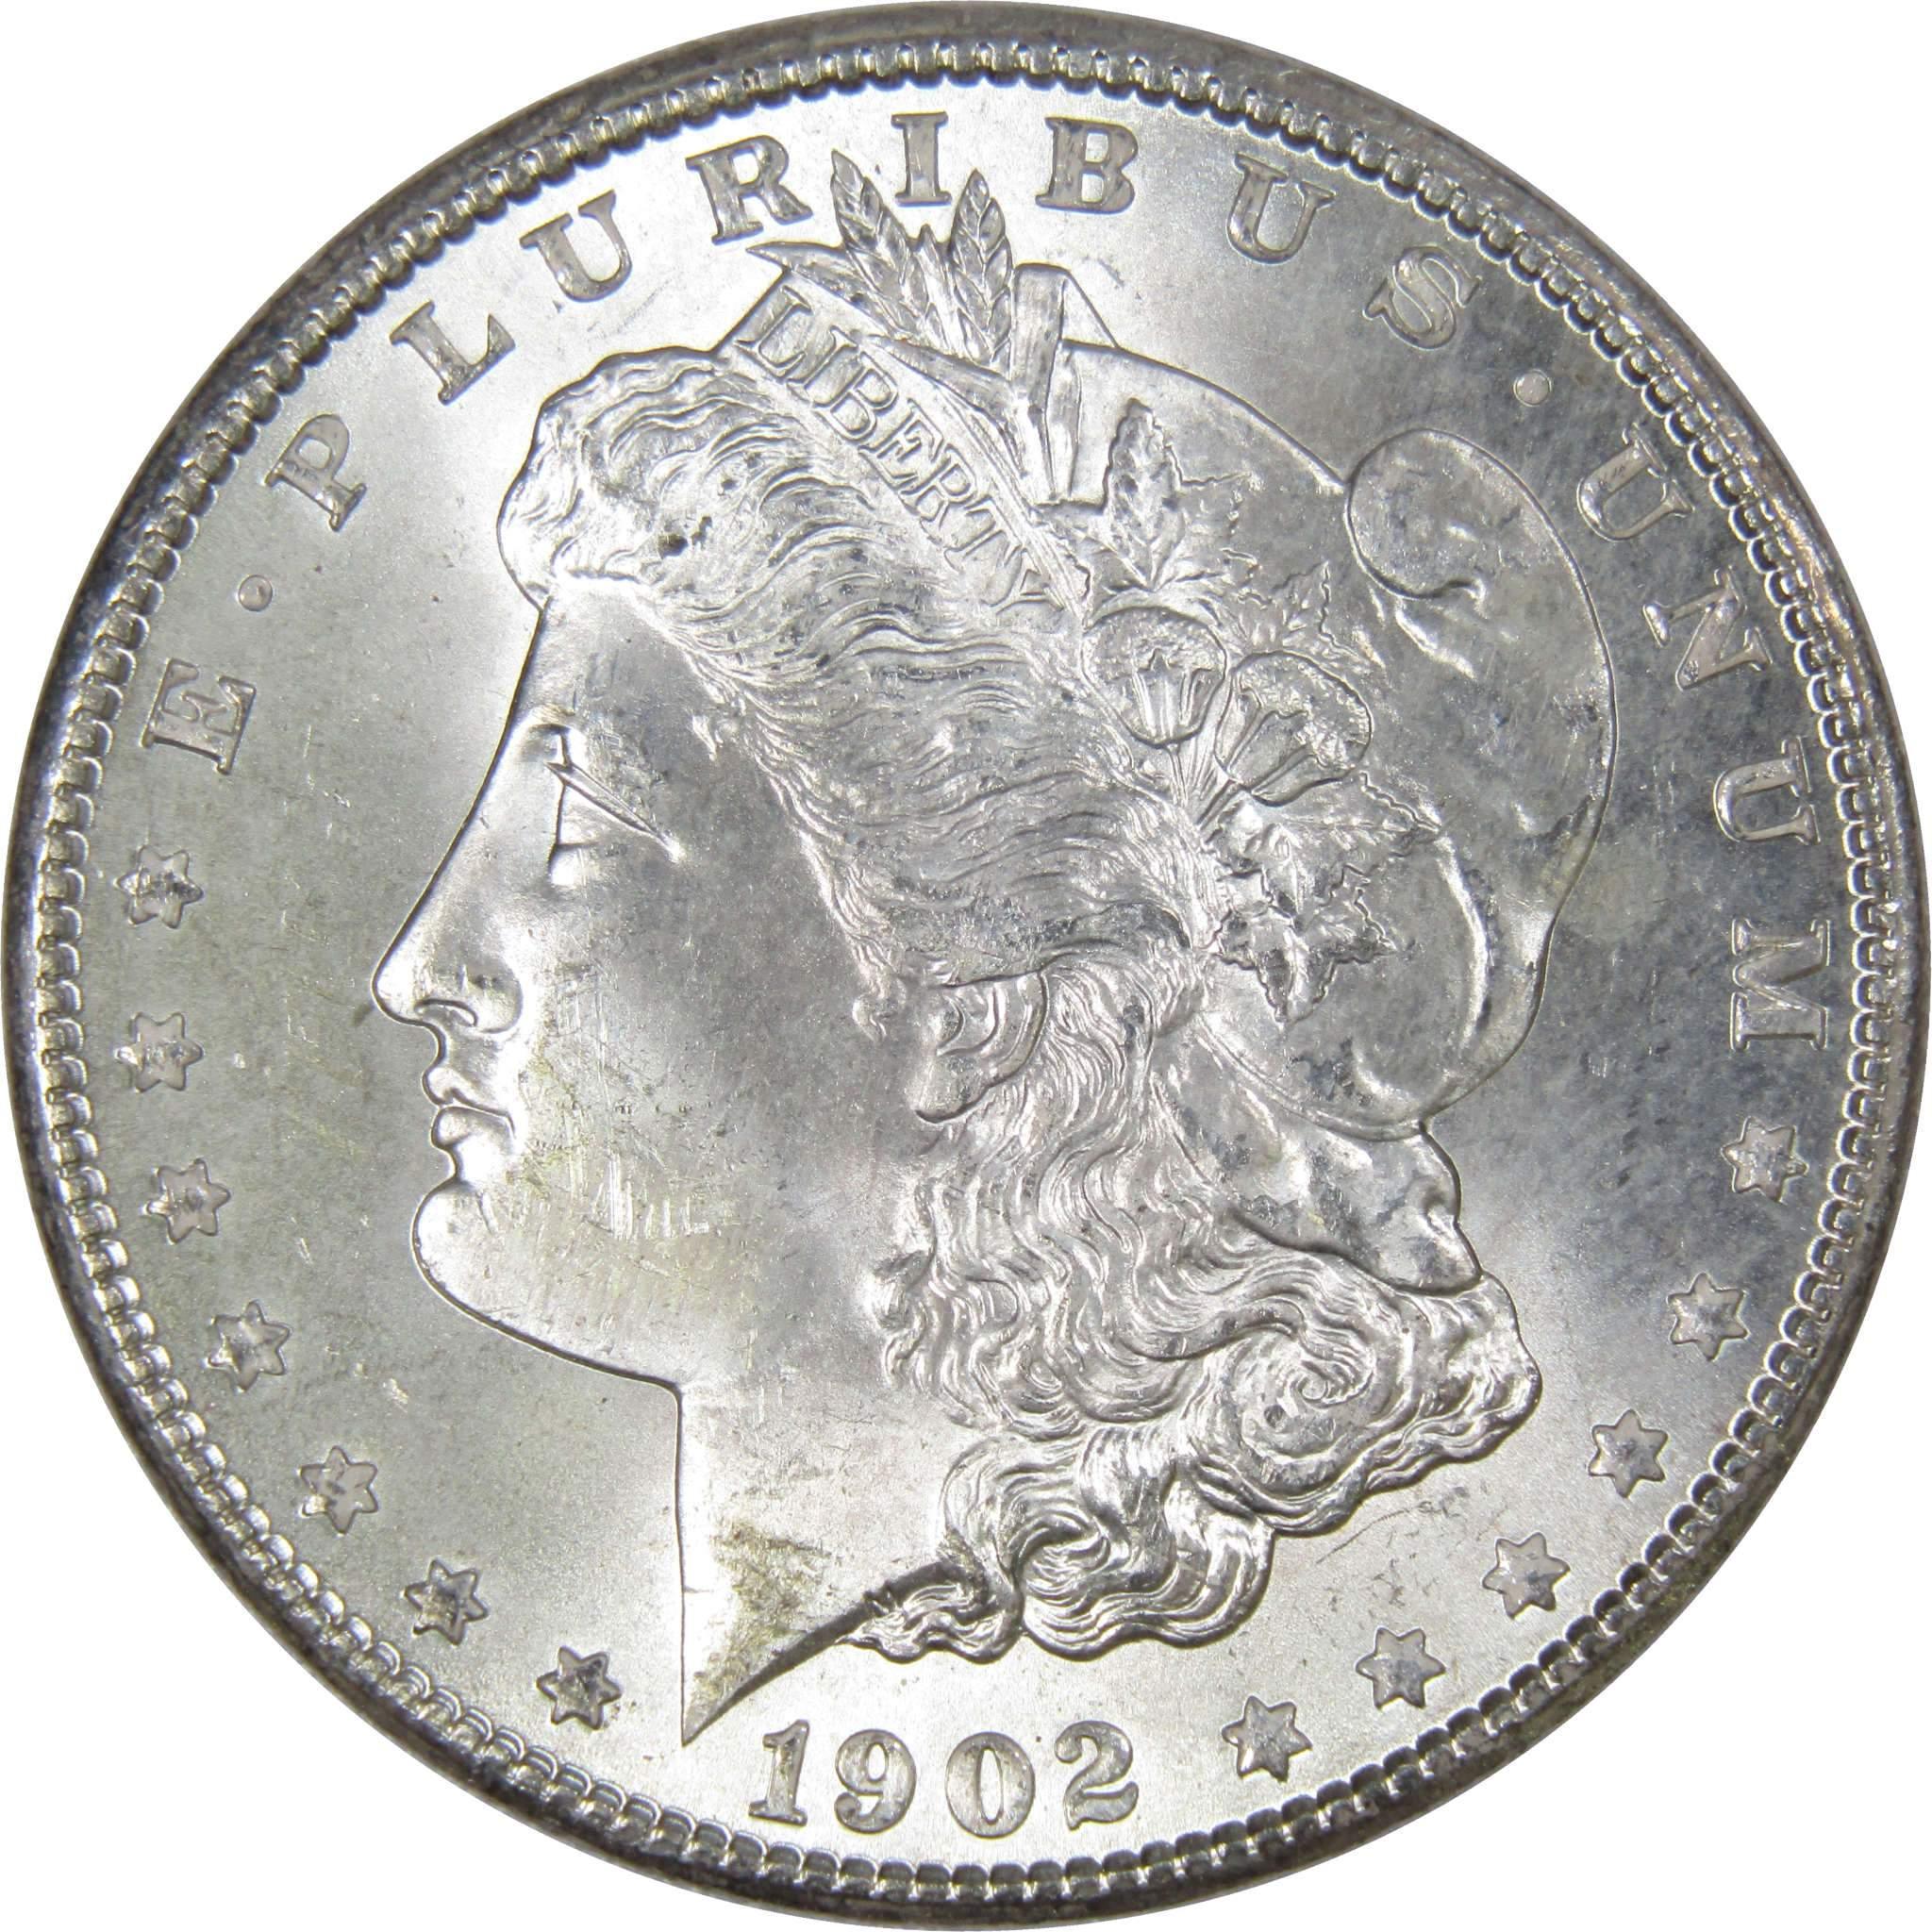 1902 O Morgan Dollar BU Choice Uncirculated Mint State 90% Silver $1 US Coin - Morgan coin - Morgan silver dollar - Morgan silver dollar for sale - Profile Coins &amp; Collectibles